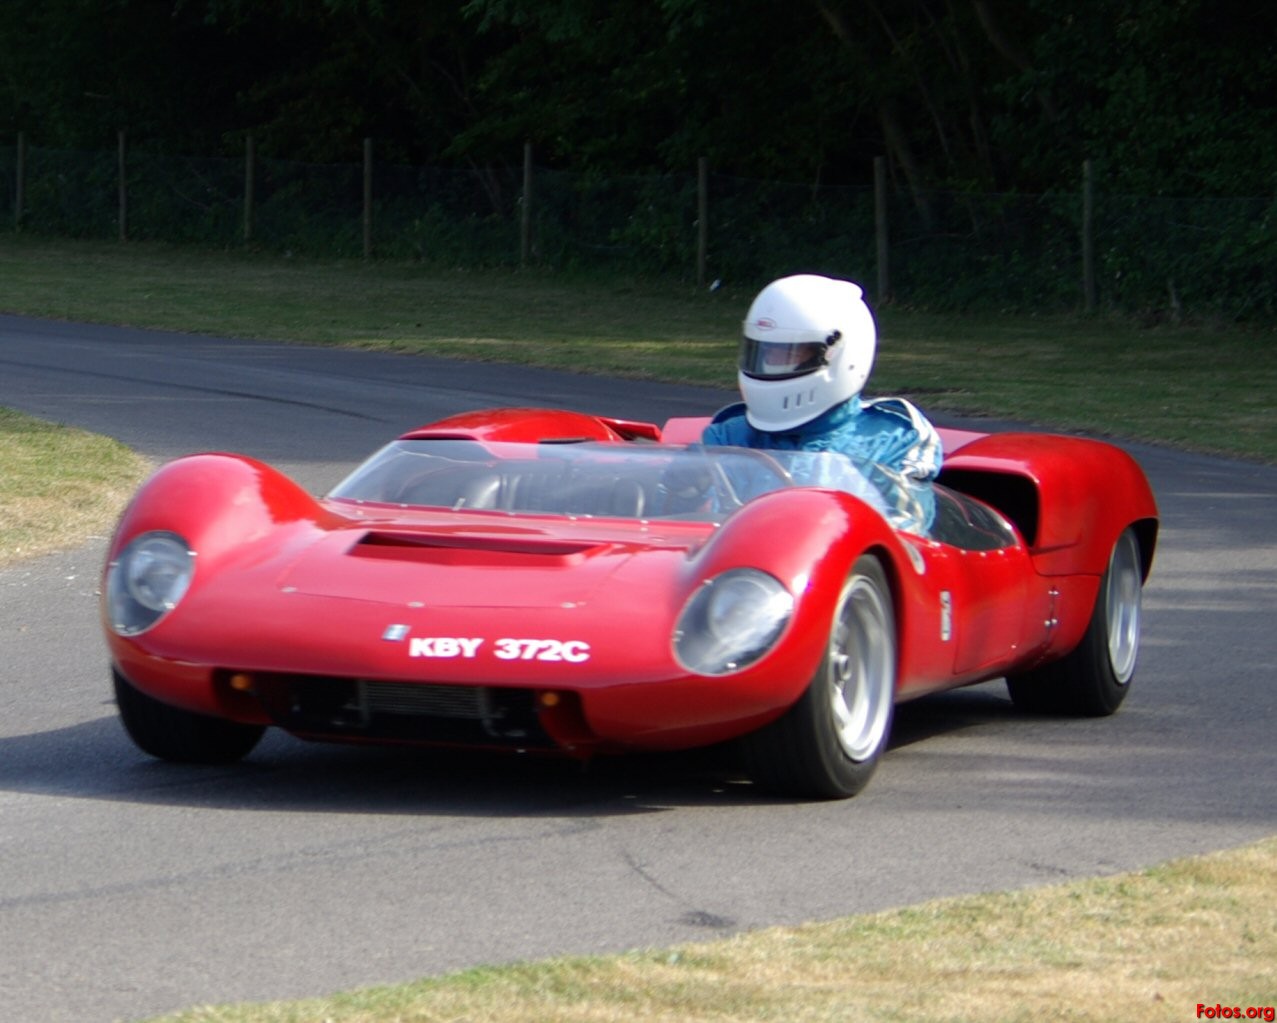 1965→1966 De Tomaso Sport 1000